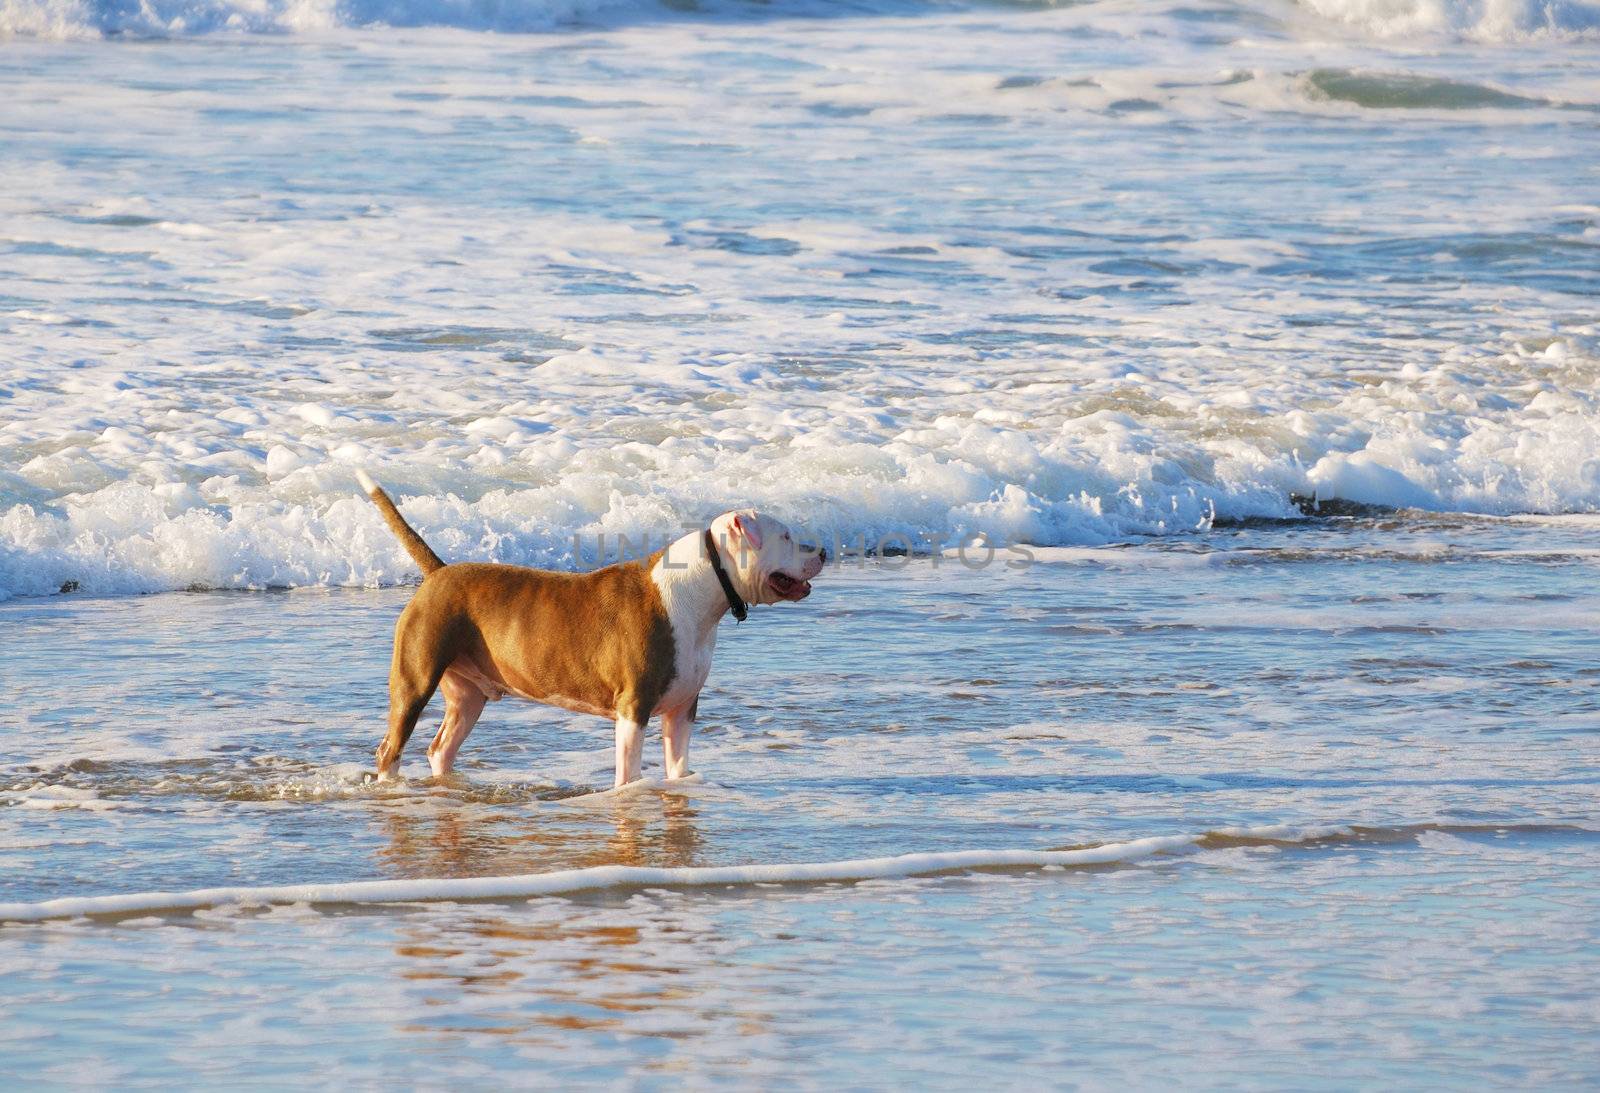 Dog on beach by whitechild